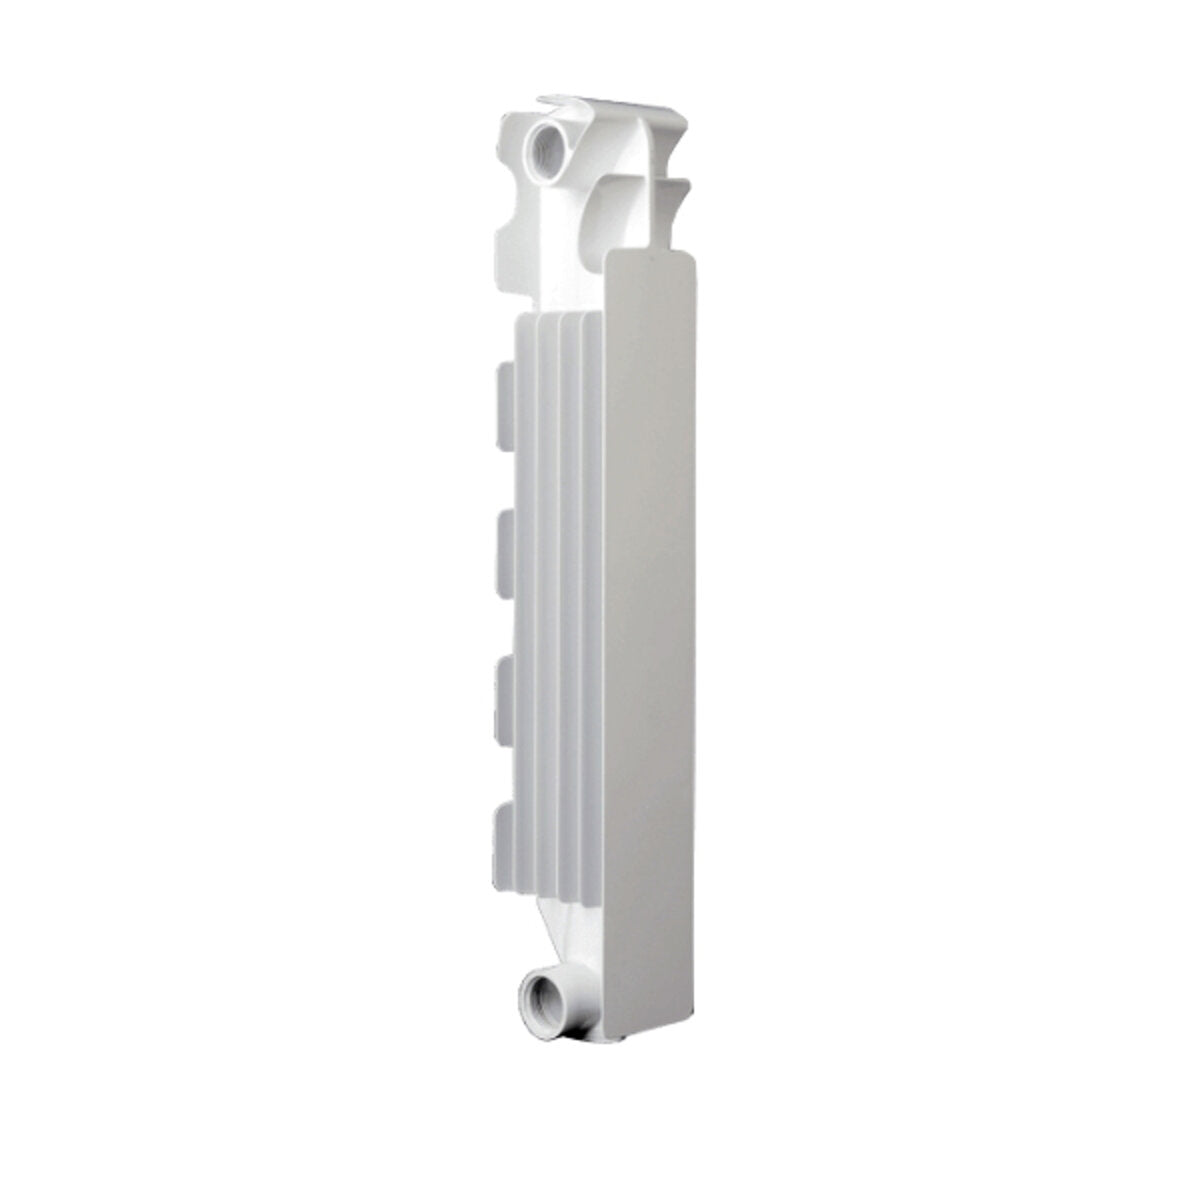 Fondital radiator in die-cast aluminum calidor super b4 7 elements center distance 350 mm